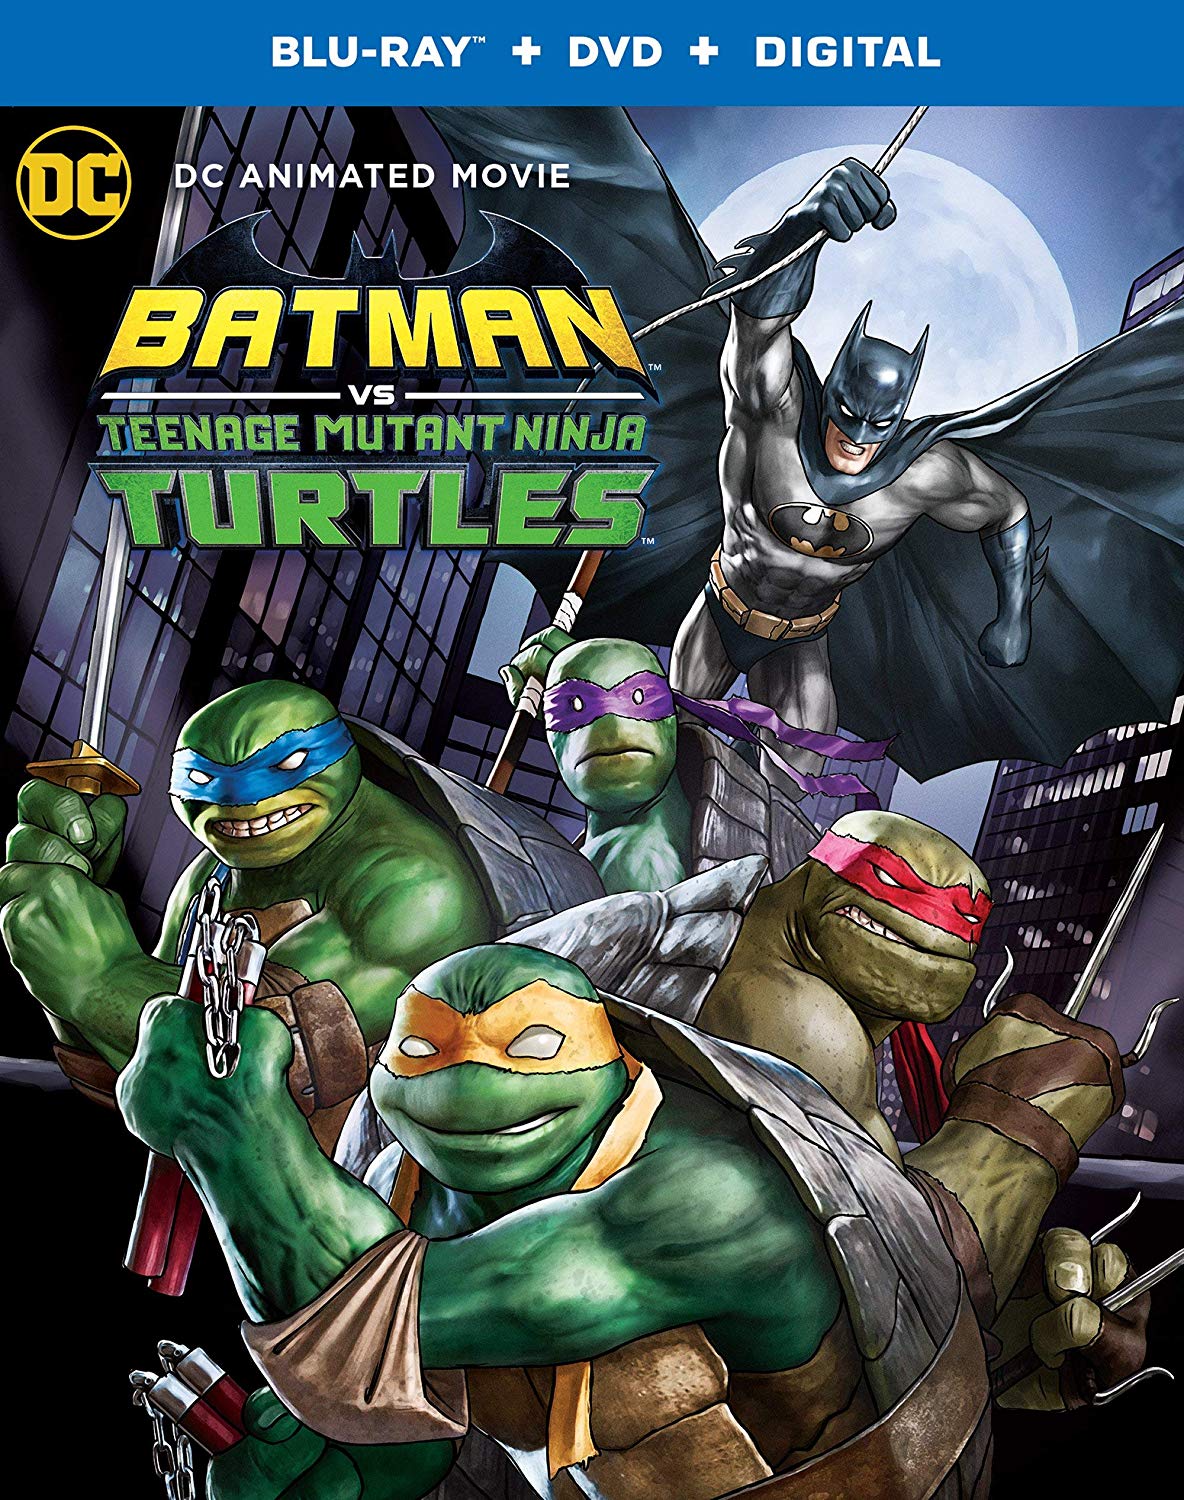 Batman vs. the Teenage Mutant Ninja Turtles - Blu-Ray DVD